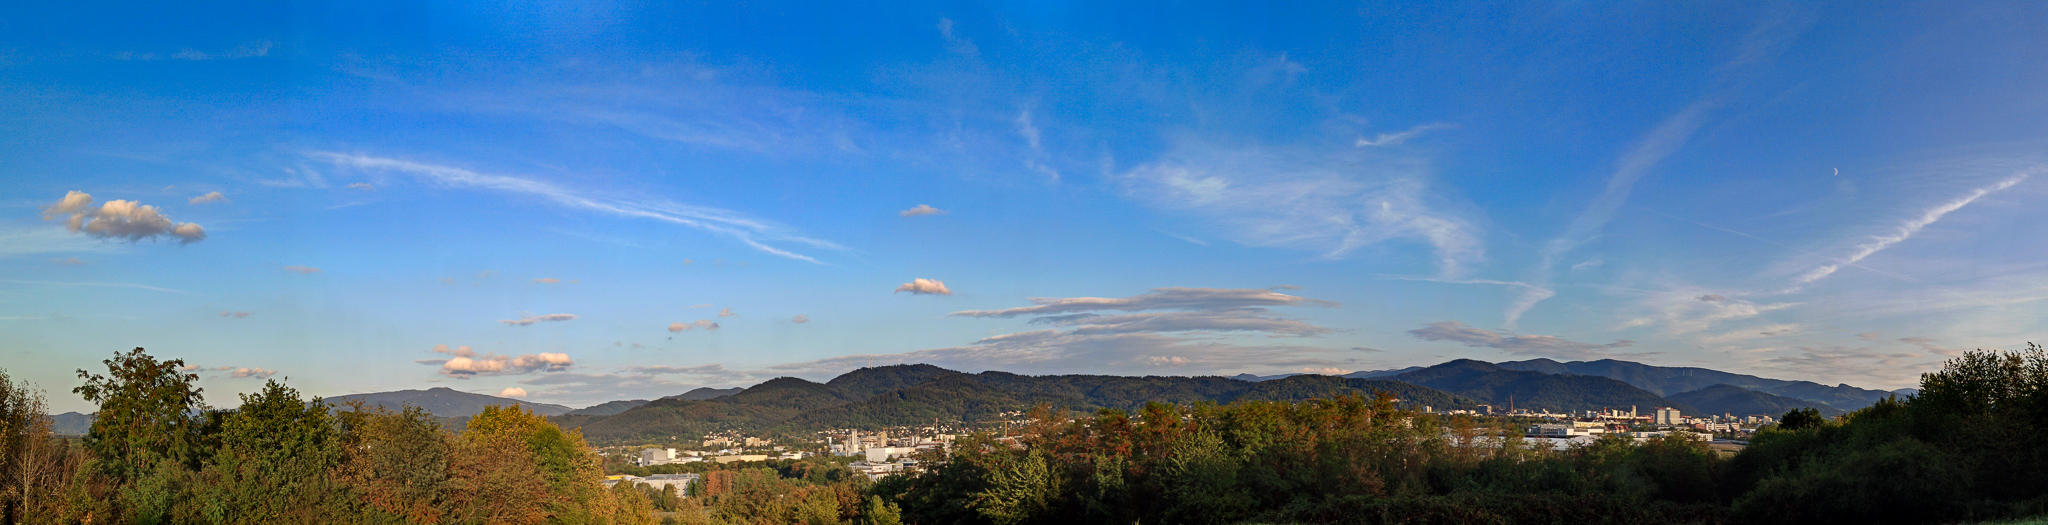 Freiburg Landscape